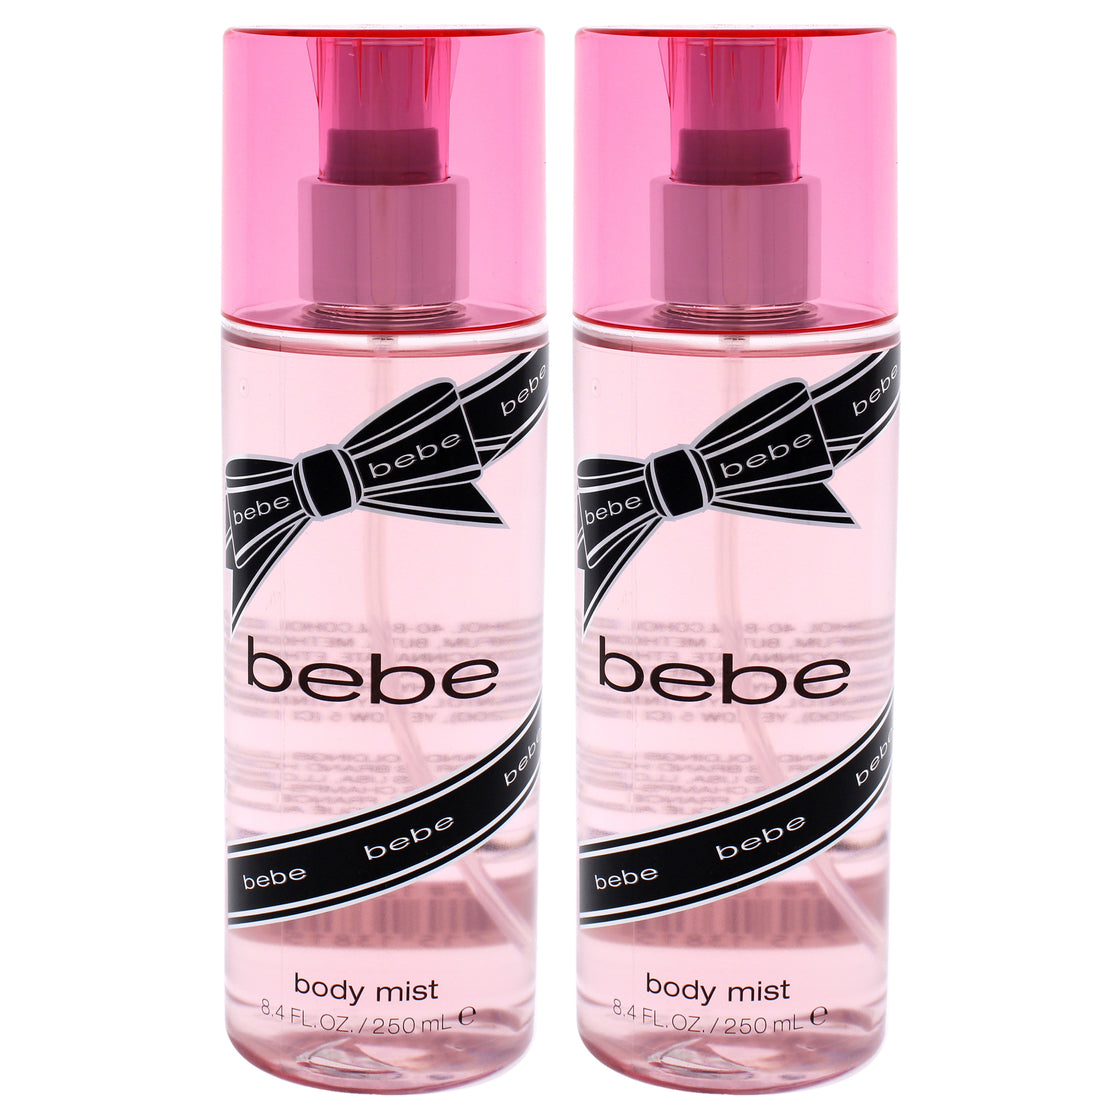 Bebe Silver by Bebe for Women - 8.4 oz Body Mist - Pack of 2